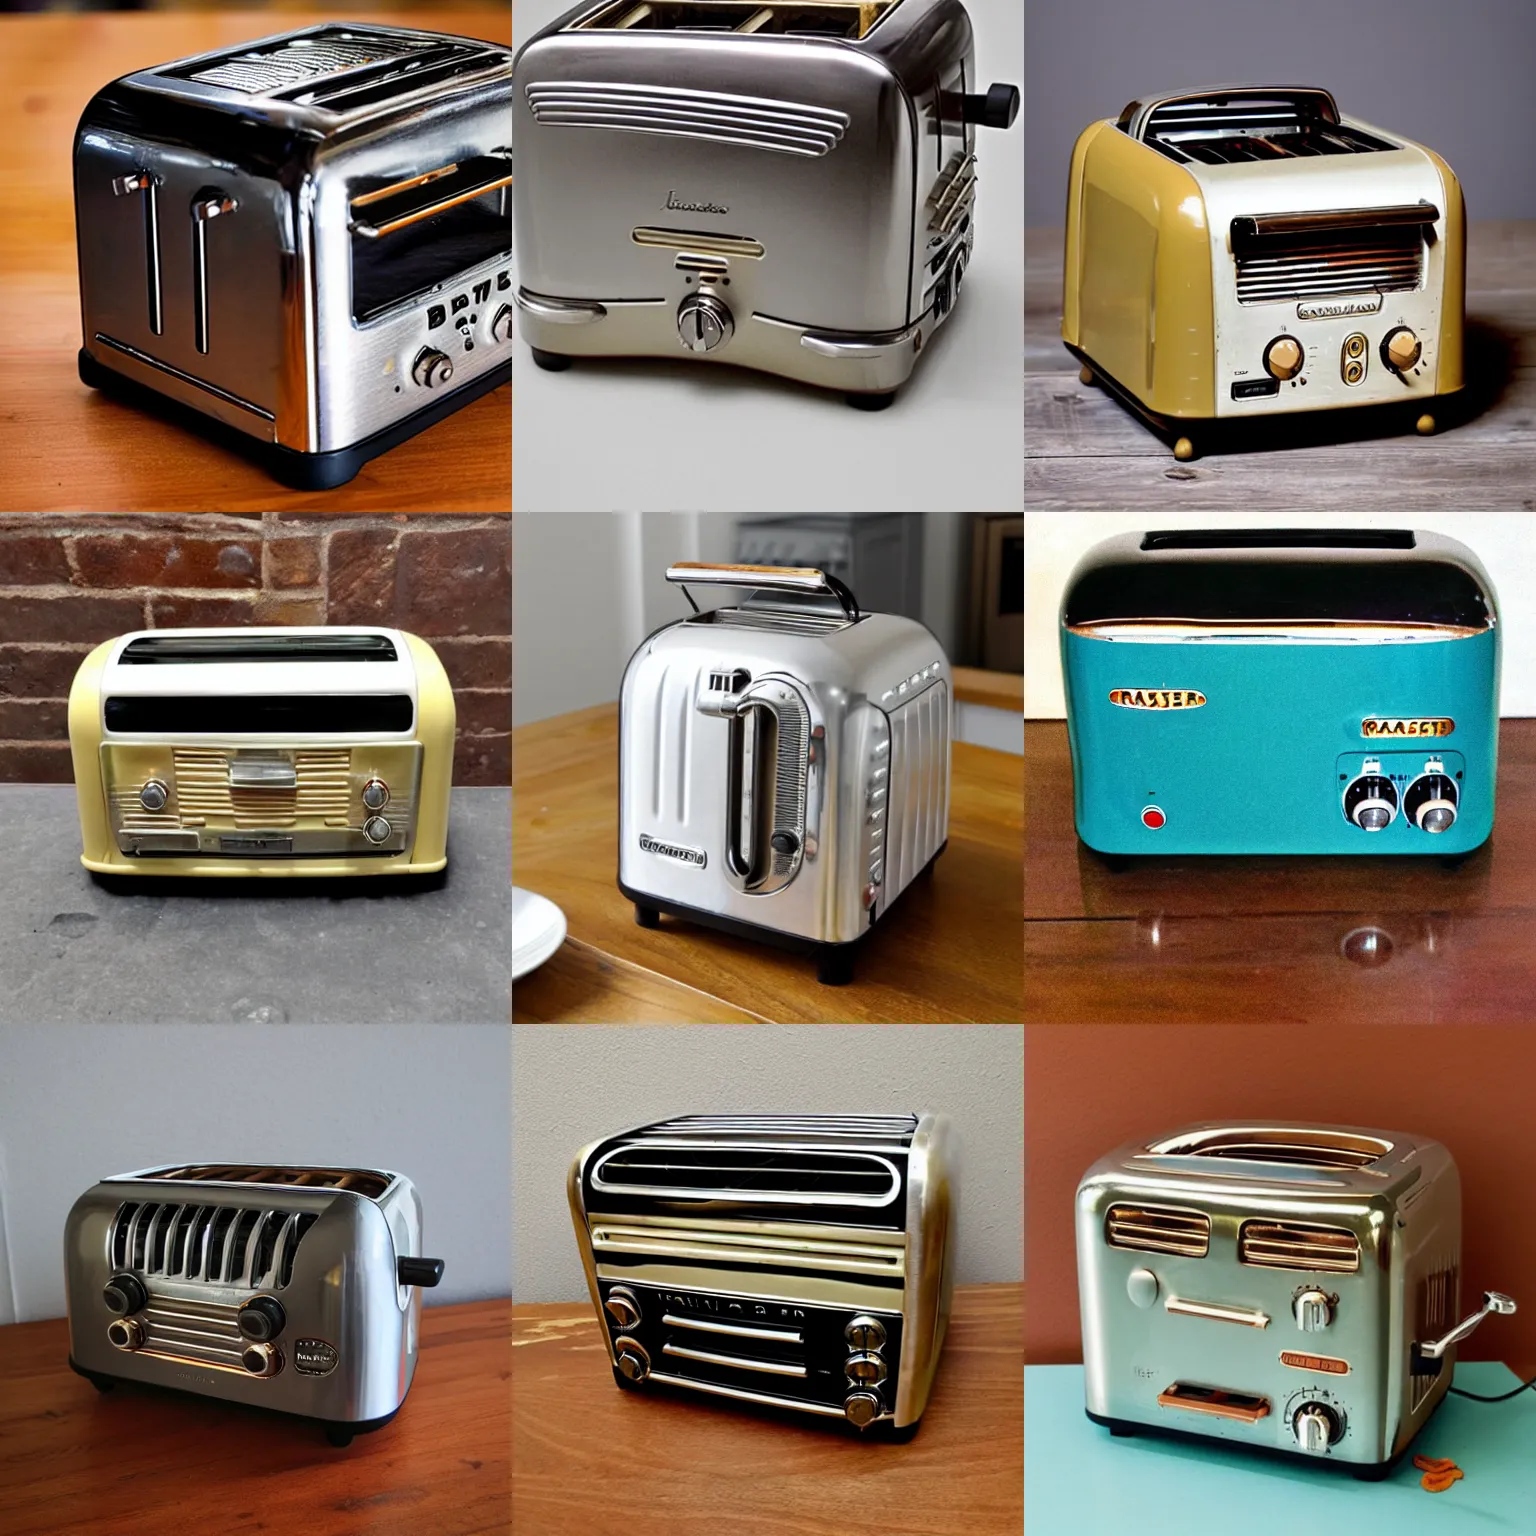 Prompt: a vintage toaster